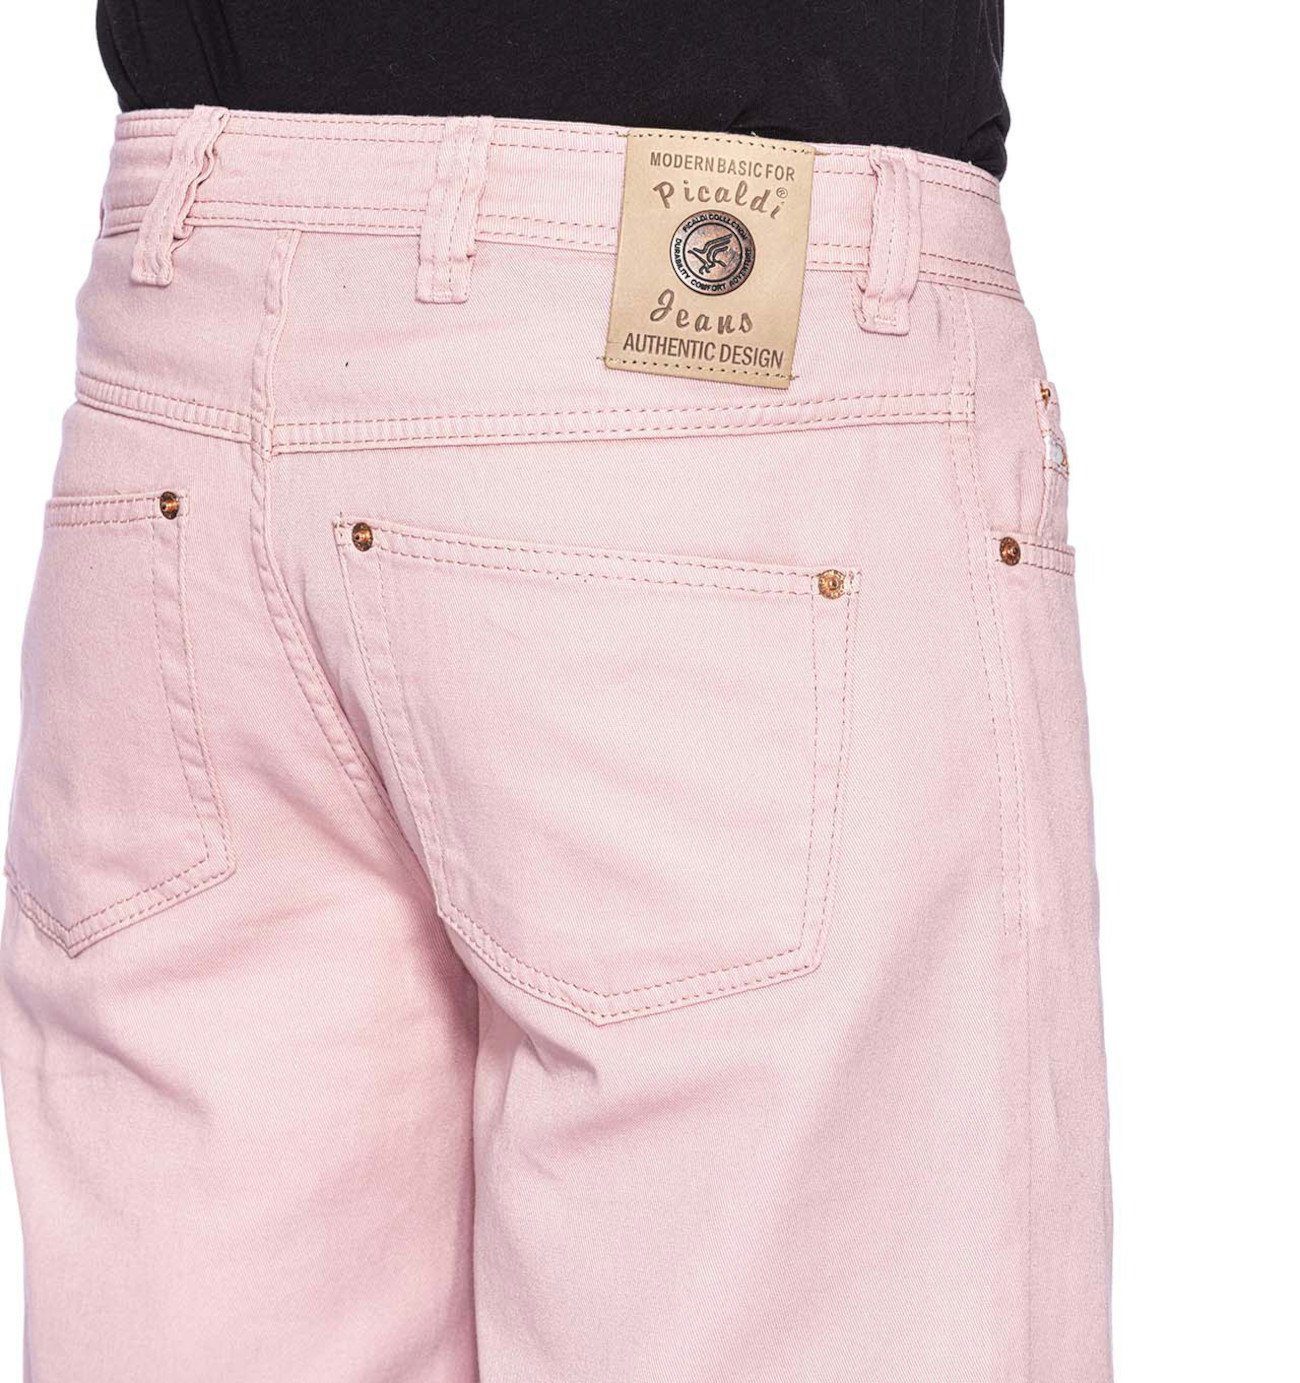 Chinoshorts Jeans Strandhose 472 PICALDI Sommerhose, Zicco Shorts Hose, Kurze Pink